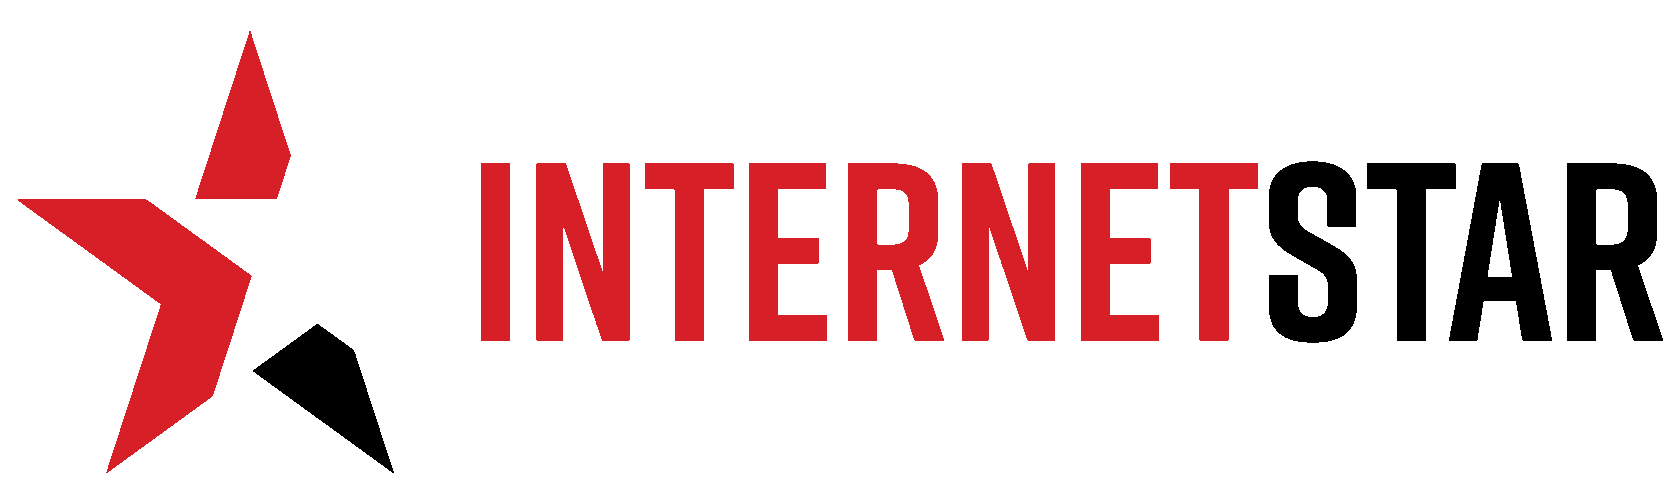 Internetstar GmbH